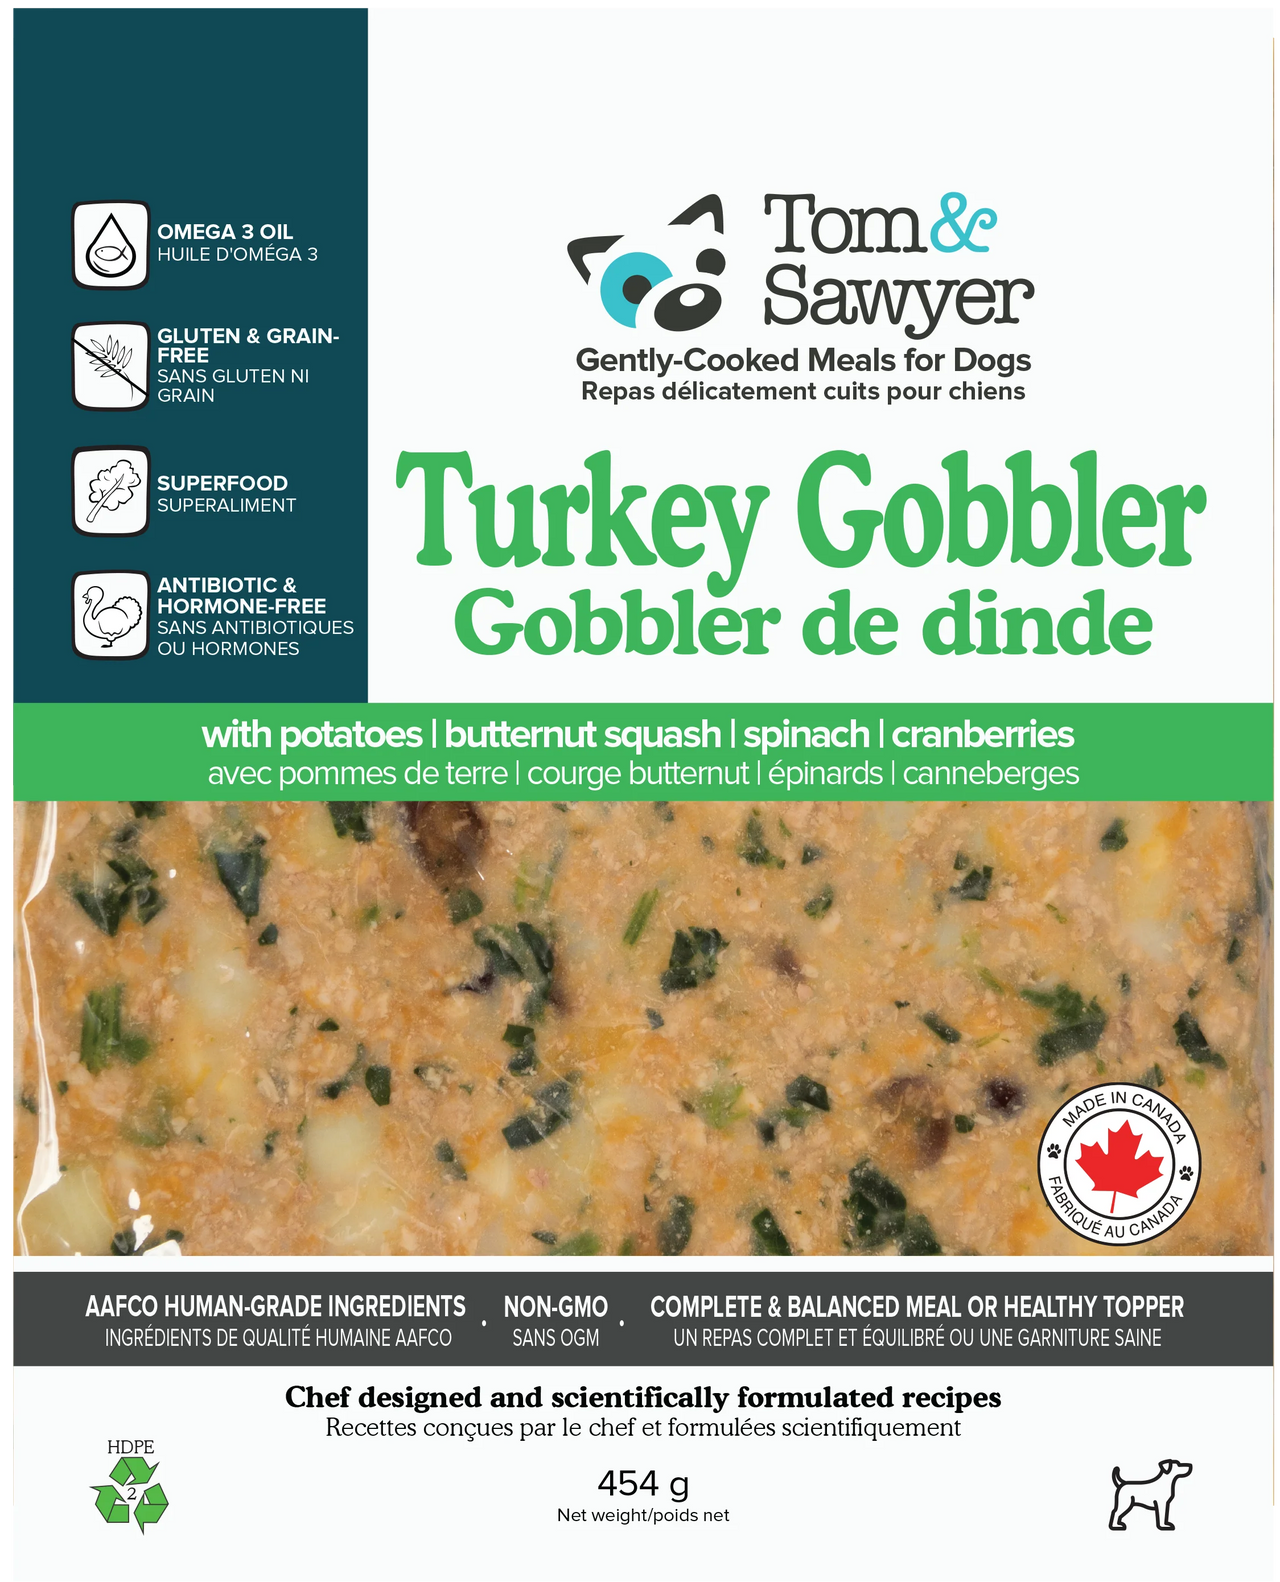 Tom & Sawyer Dog Gently Cooked Turkey Gobbler